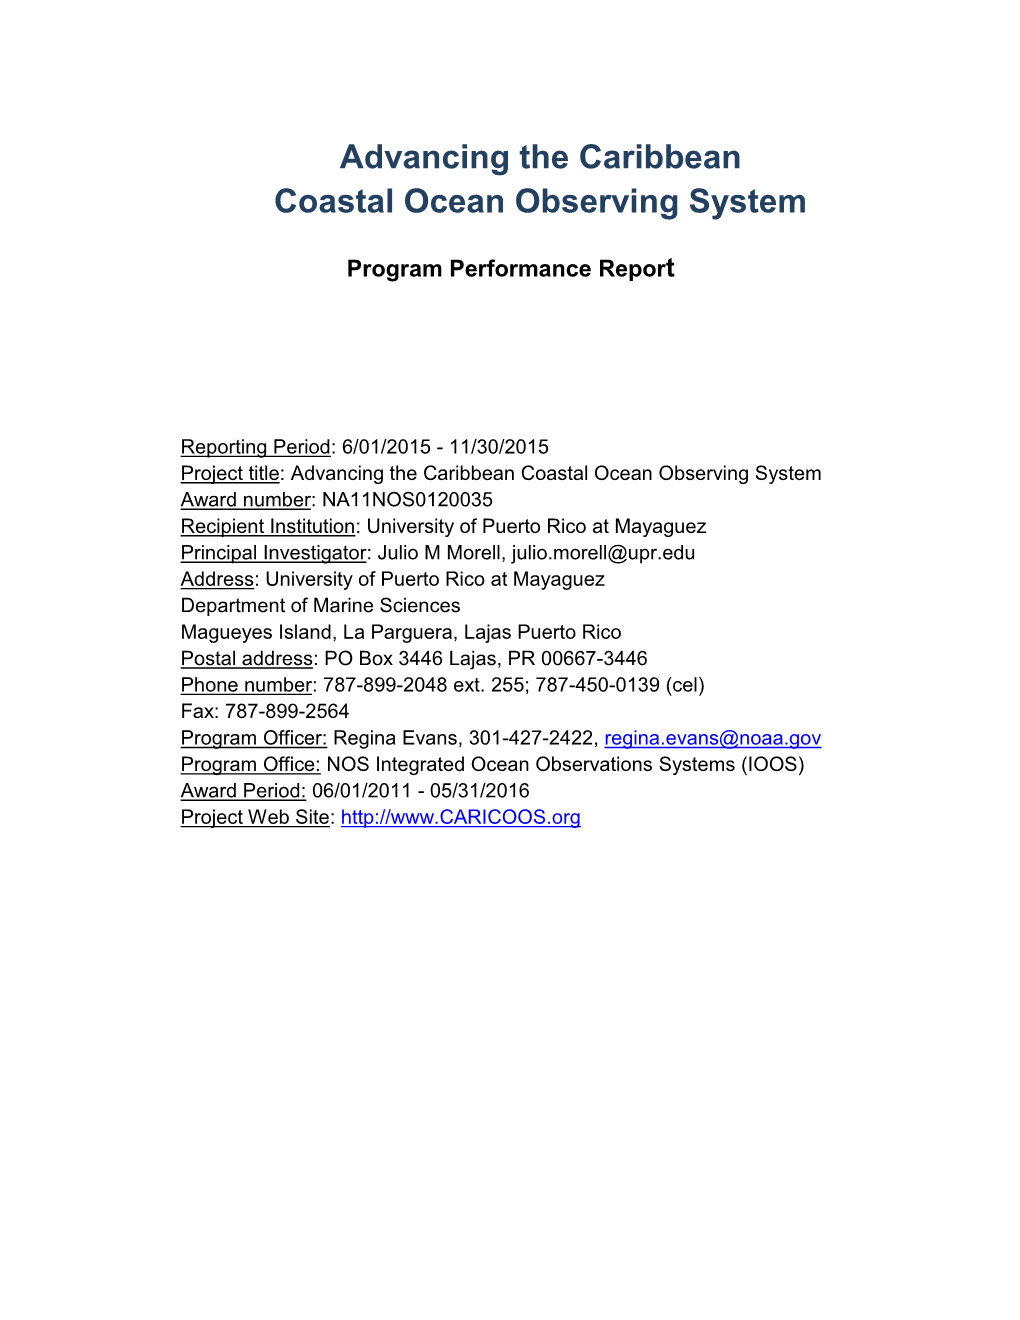 Advancing the Caribbean Coastal Ocean Observing System